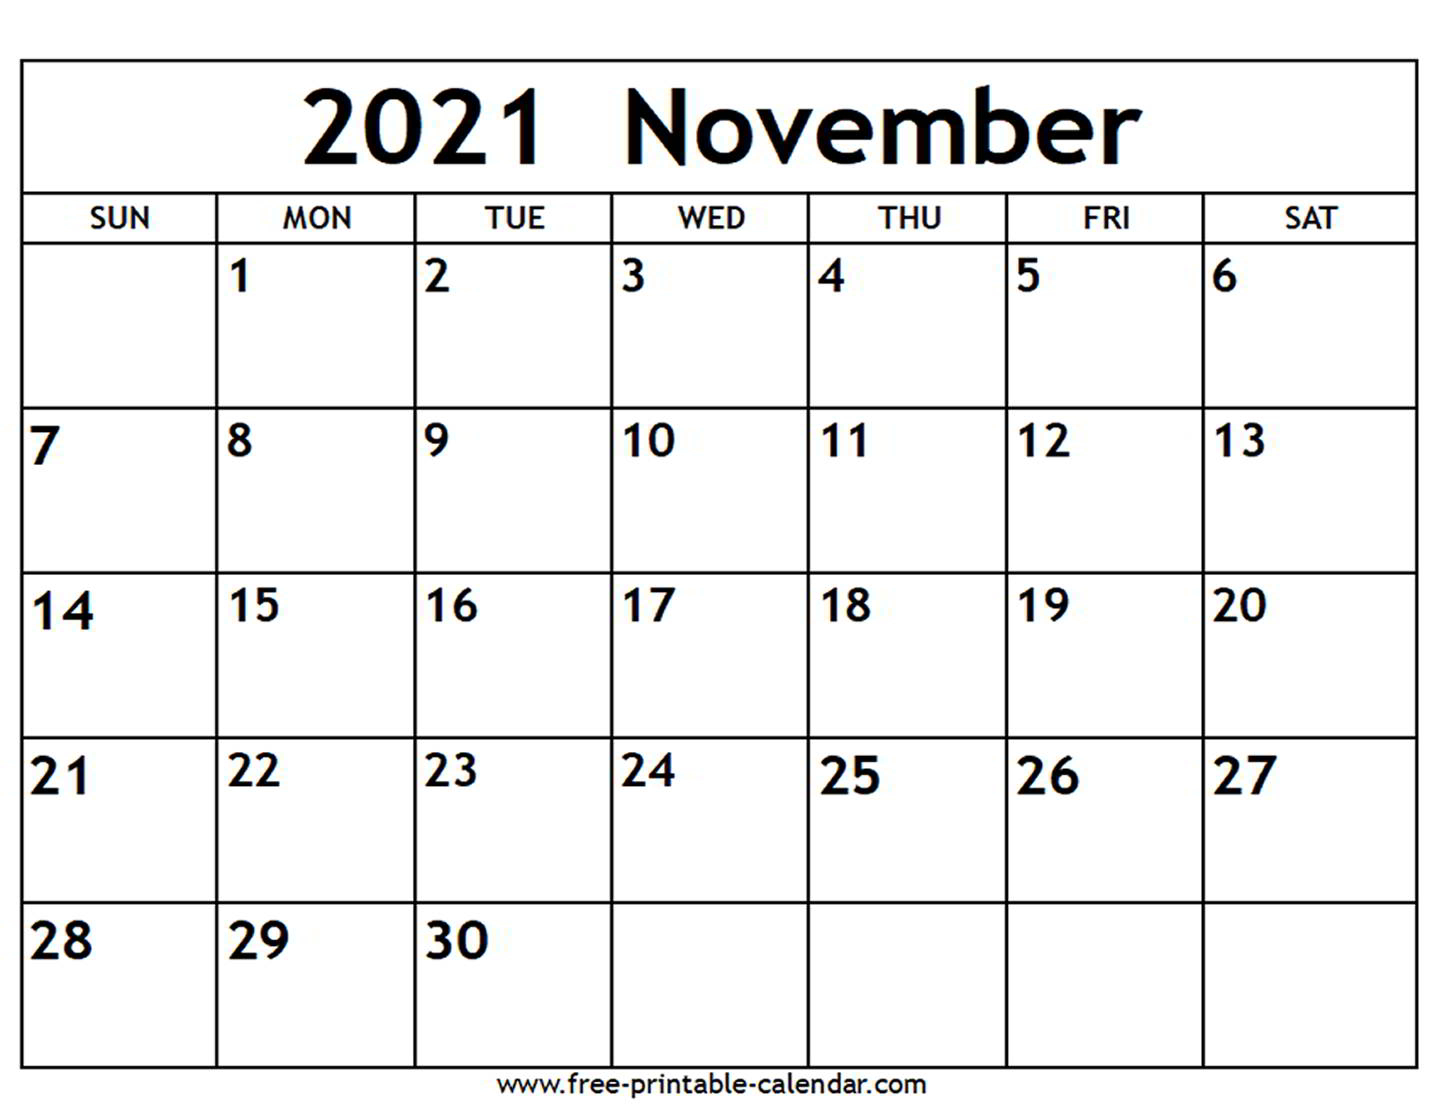 November 2021 Calendar - Free-Printable-Calendar